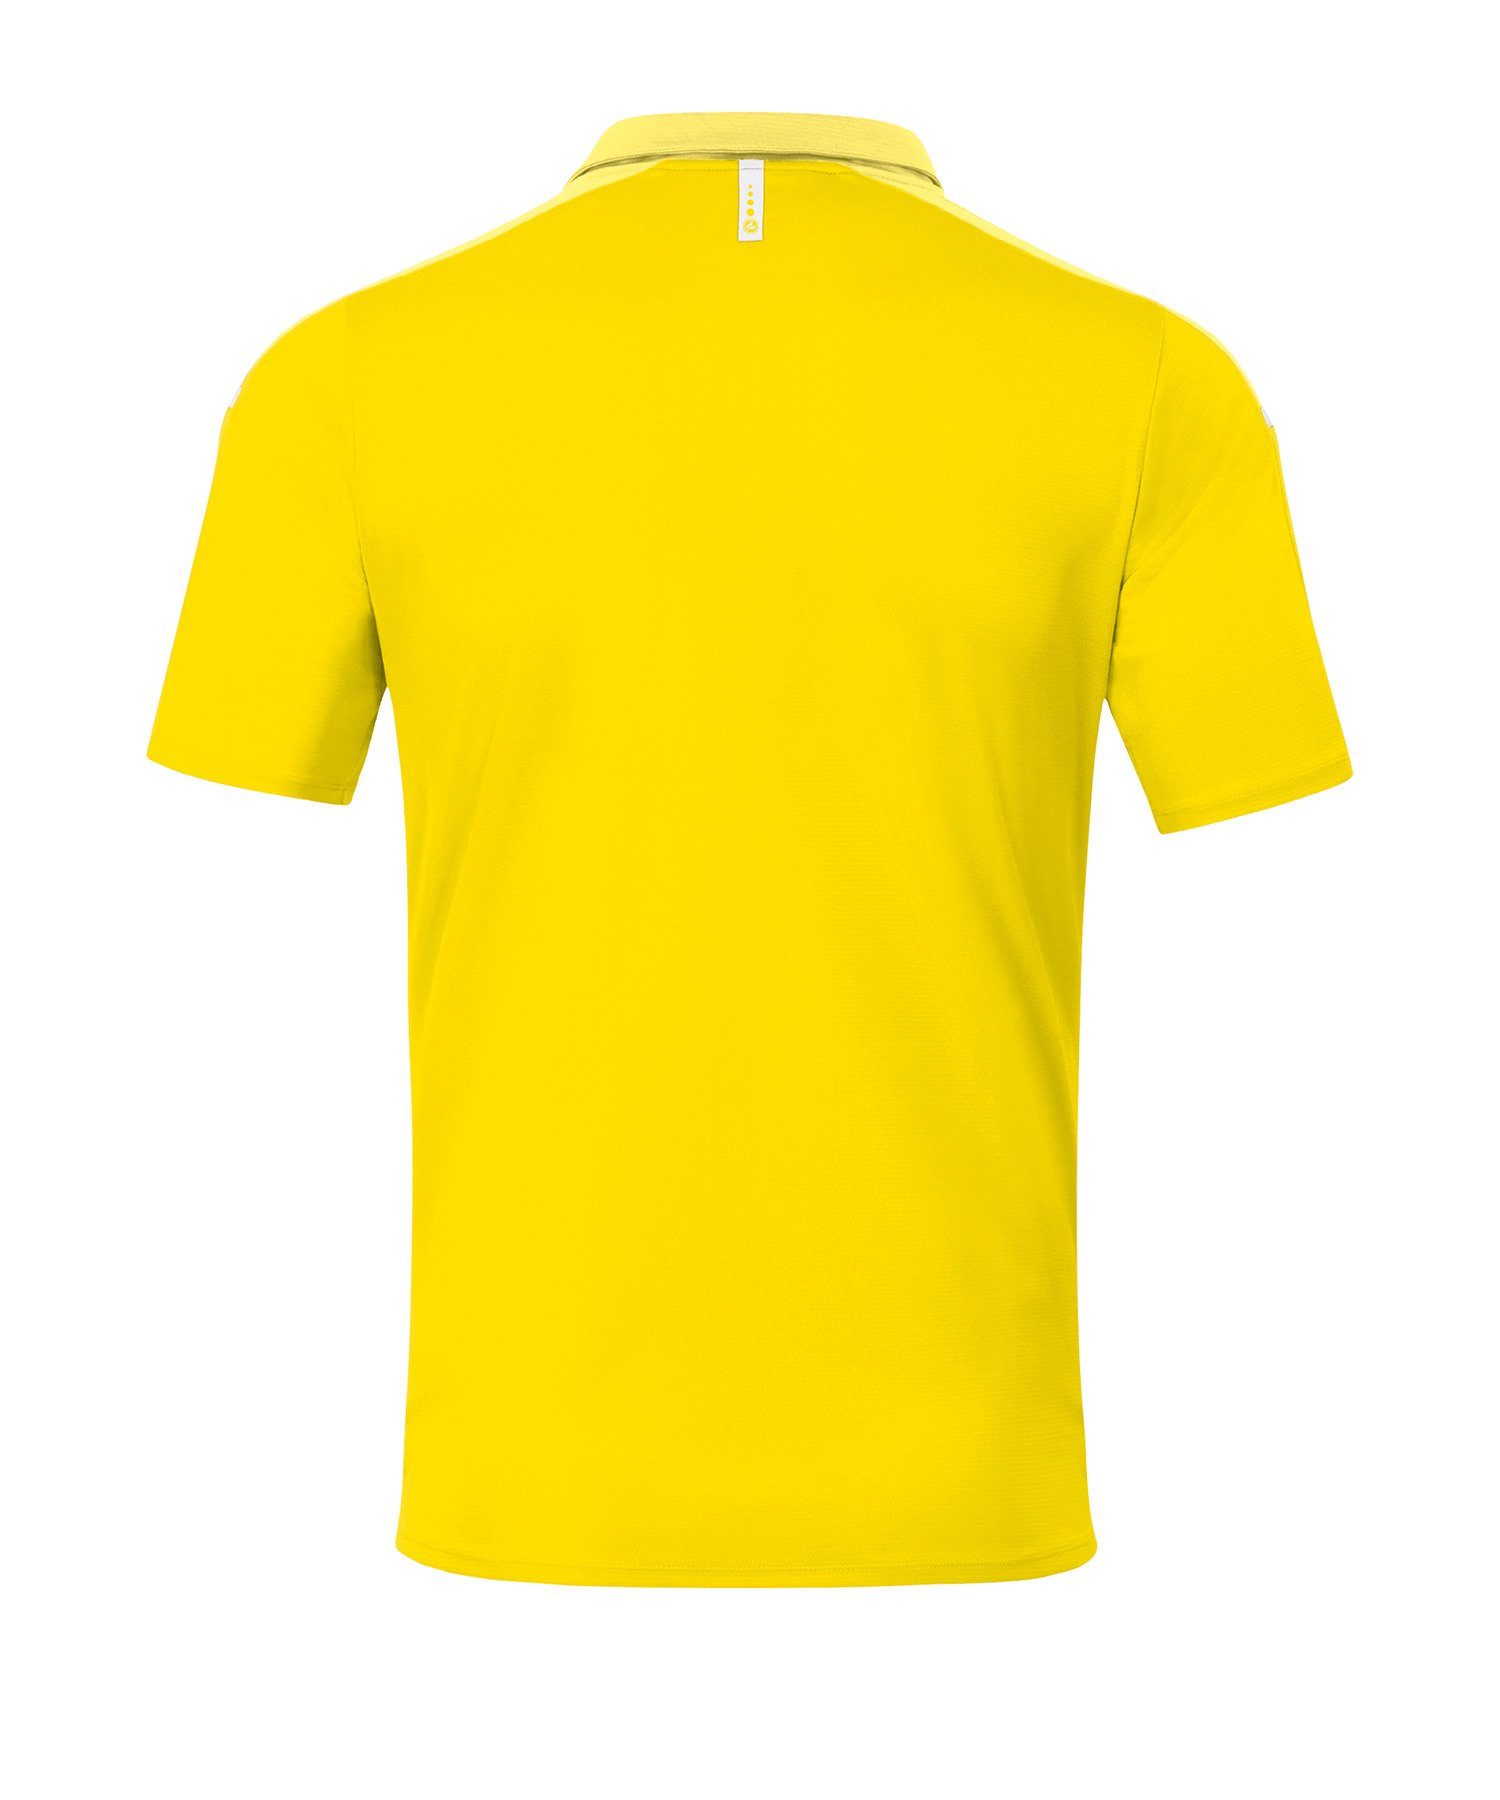 Champ 2.0 Jako Poloshirt gelb Poloshirt default